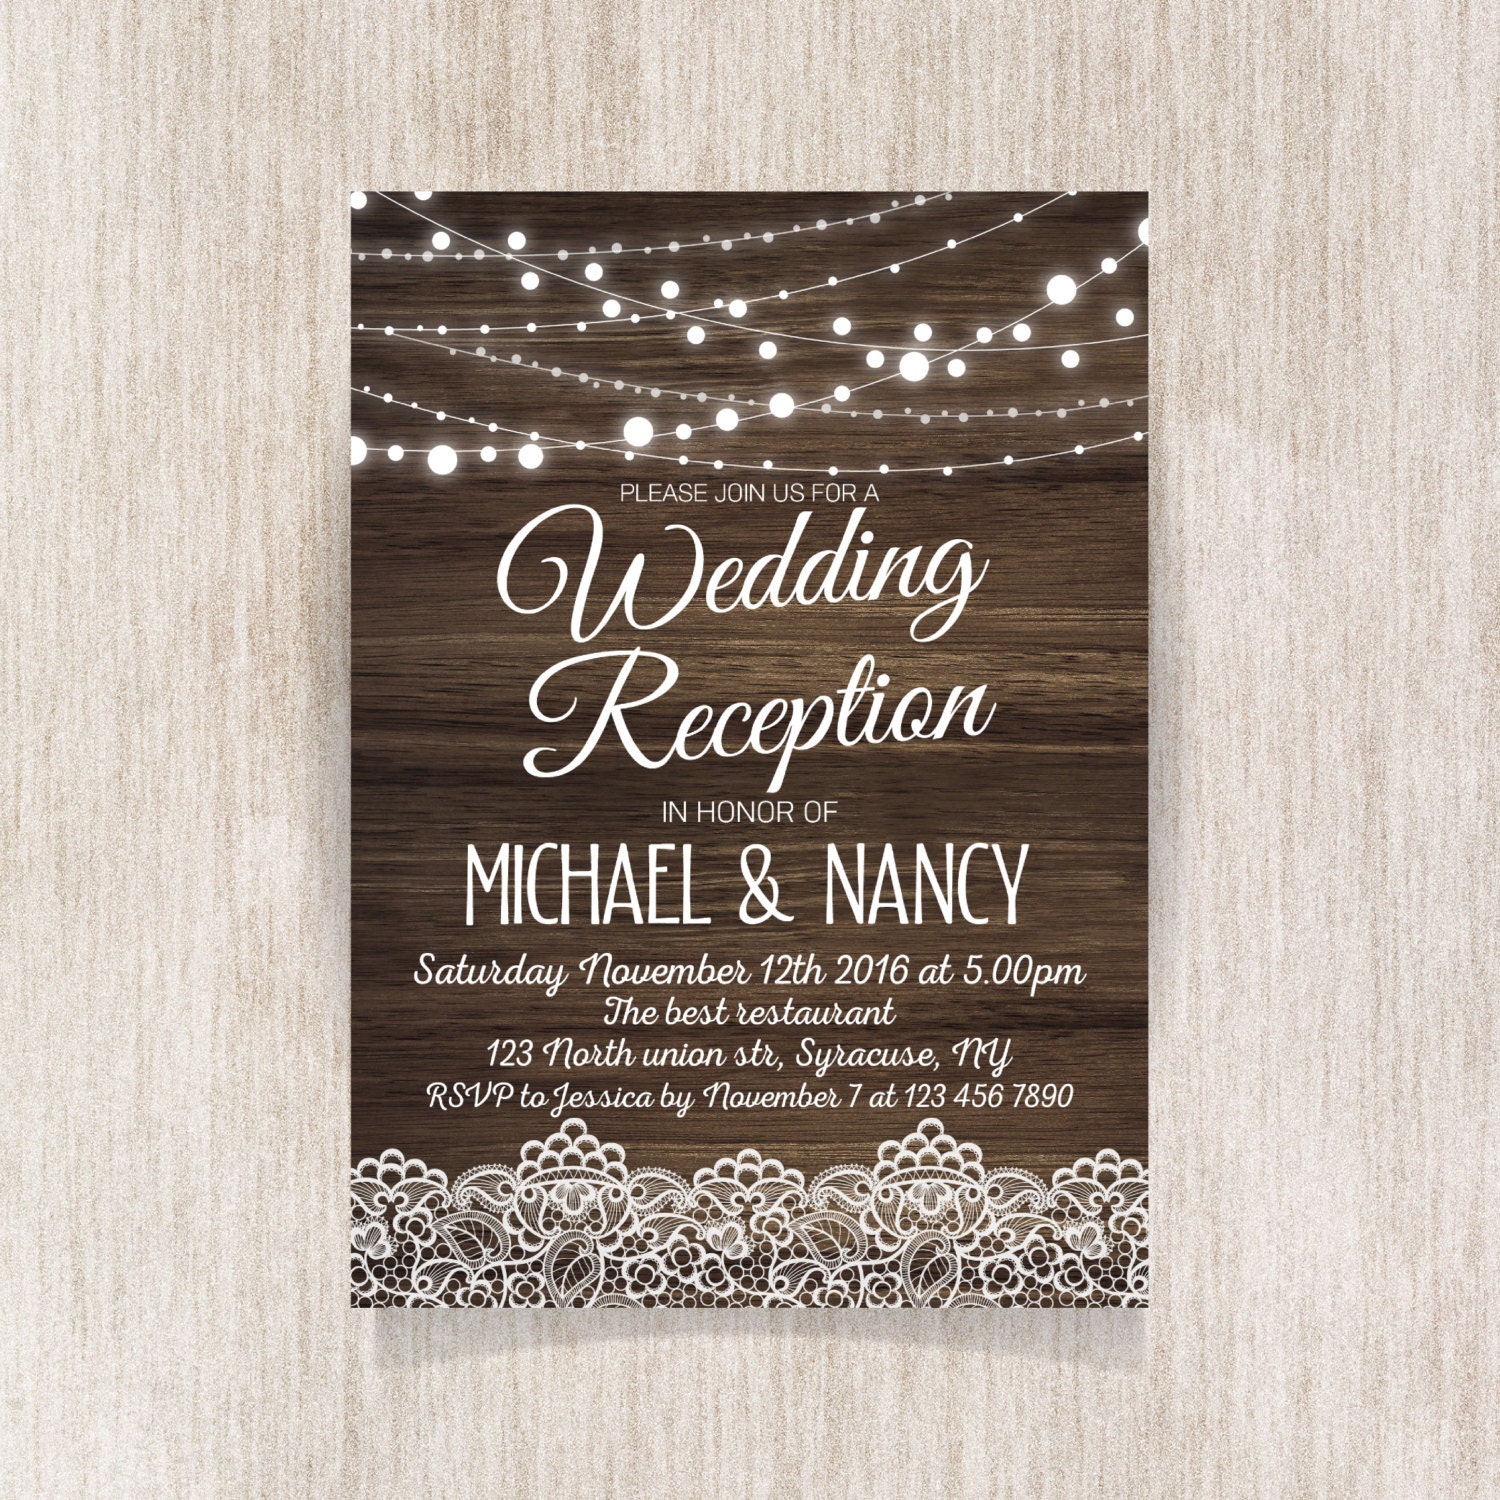 Rustic Wedding Reception Invitation. Wedding Reception | Etsy